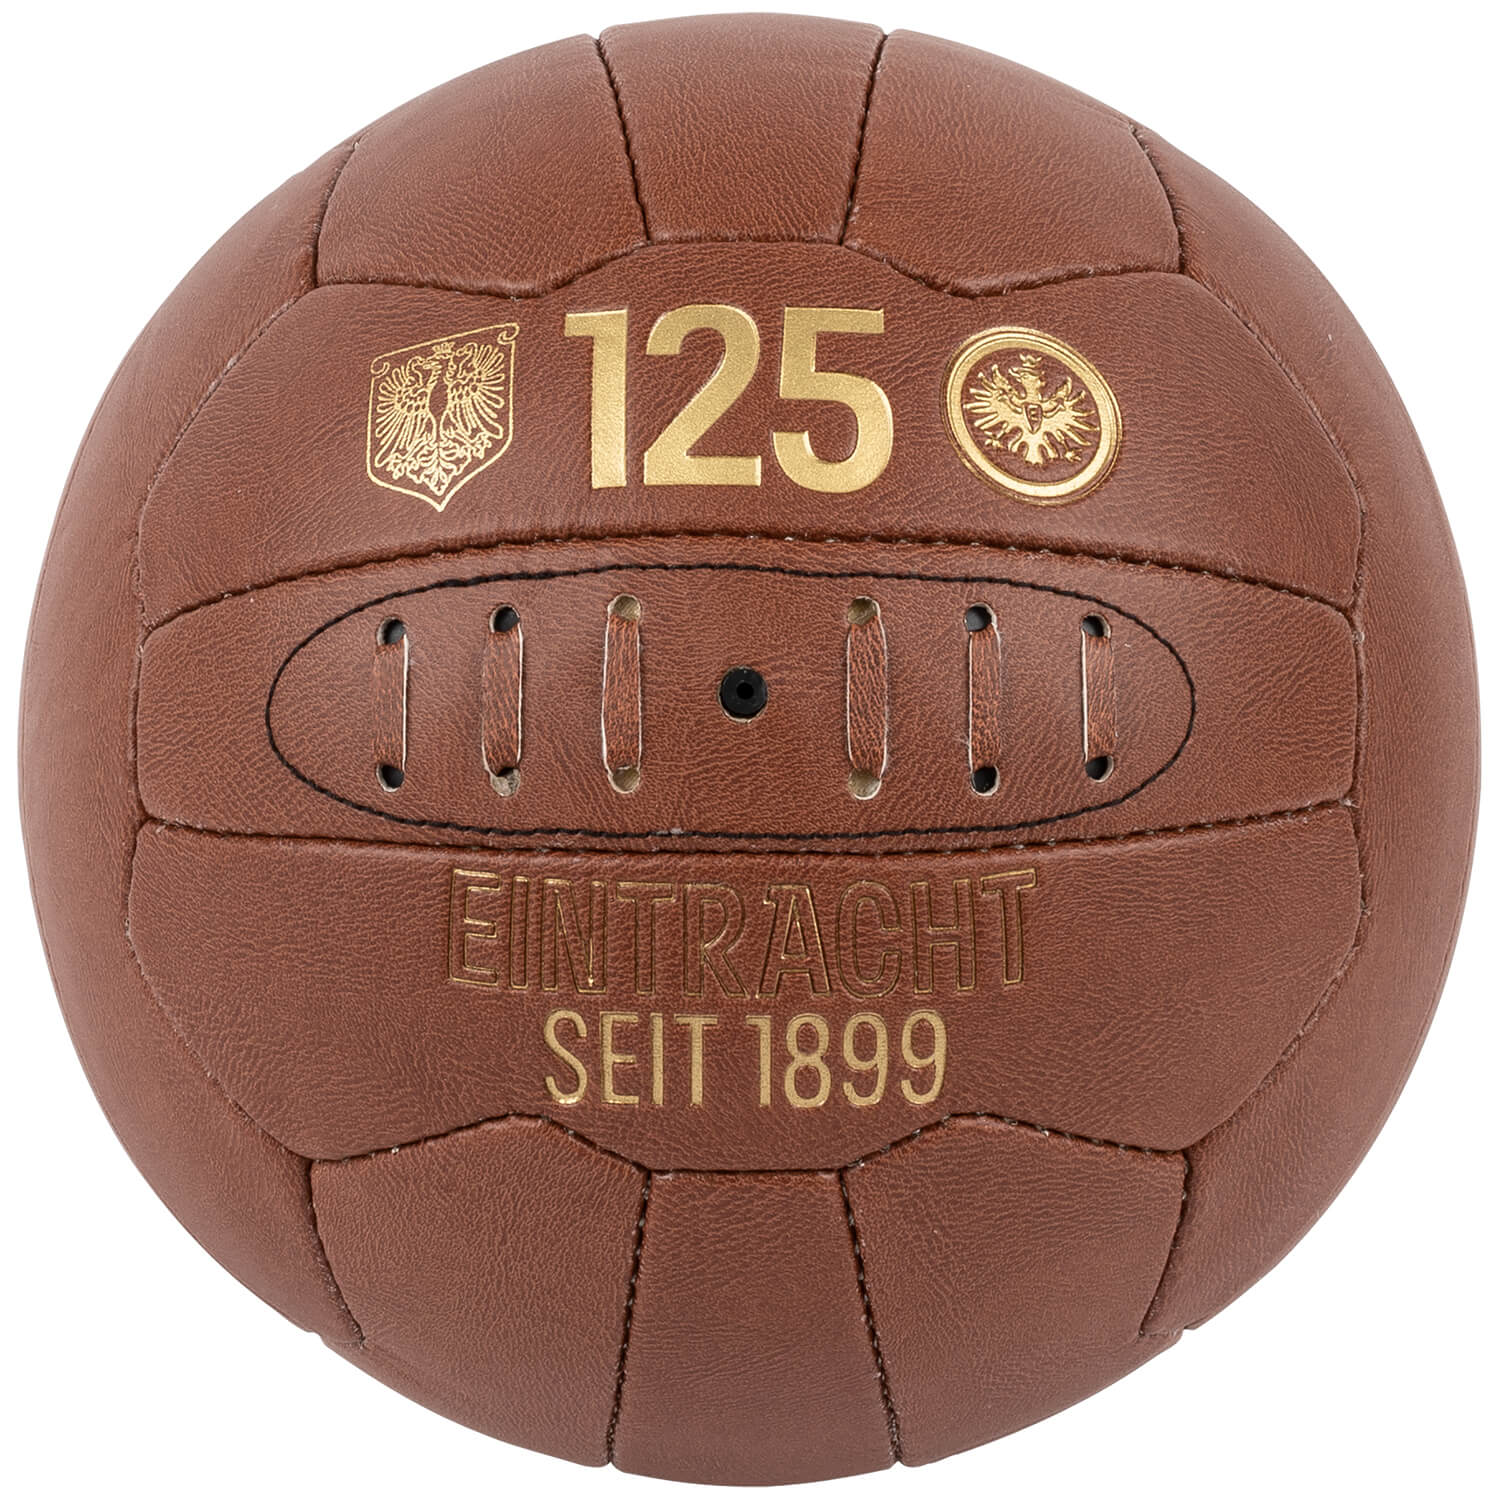 Bild 1: Retro Ball 125 Jahre